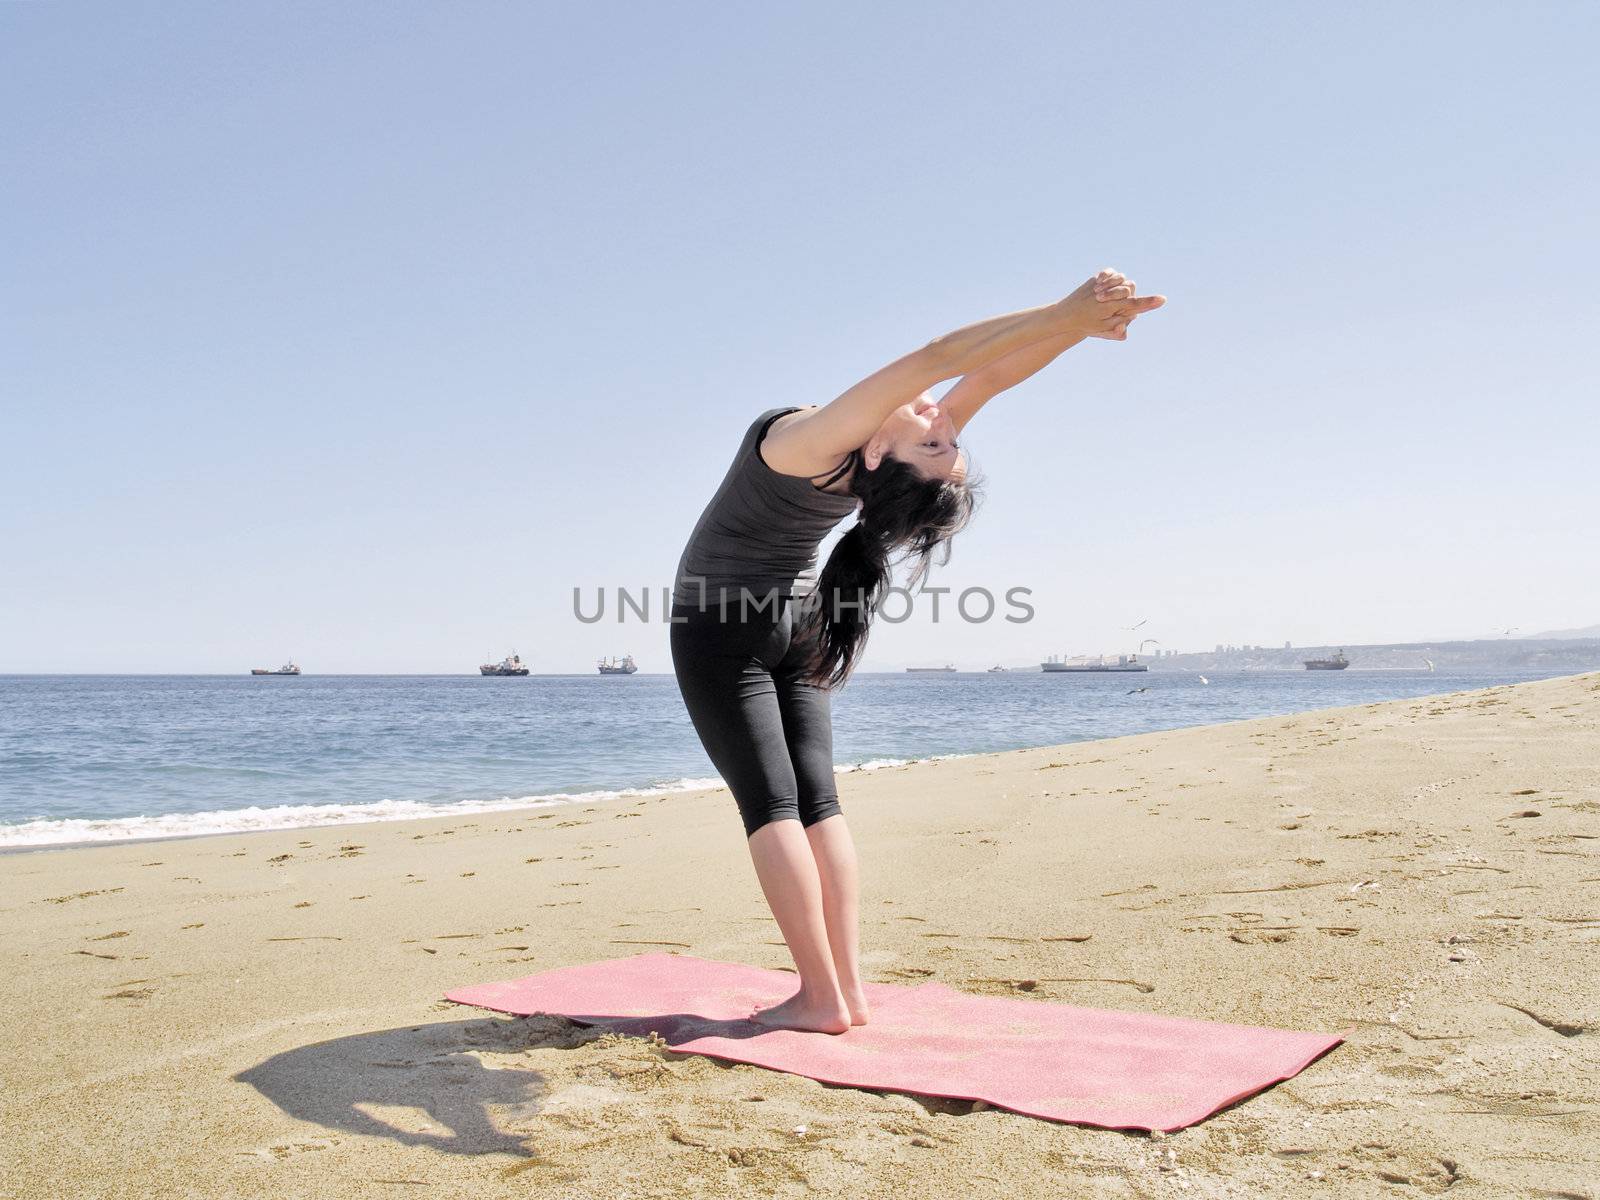 Yoga teacher practising at the beach pose arda chandrasana